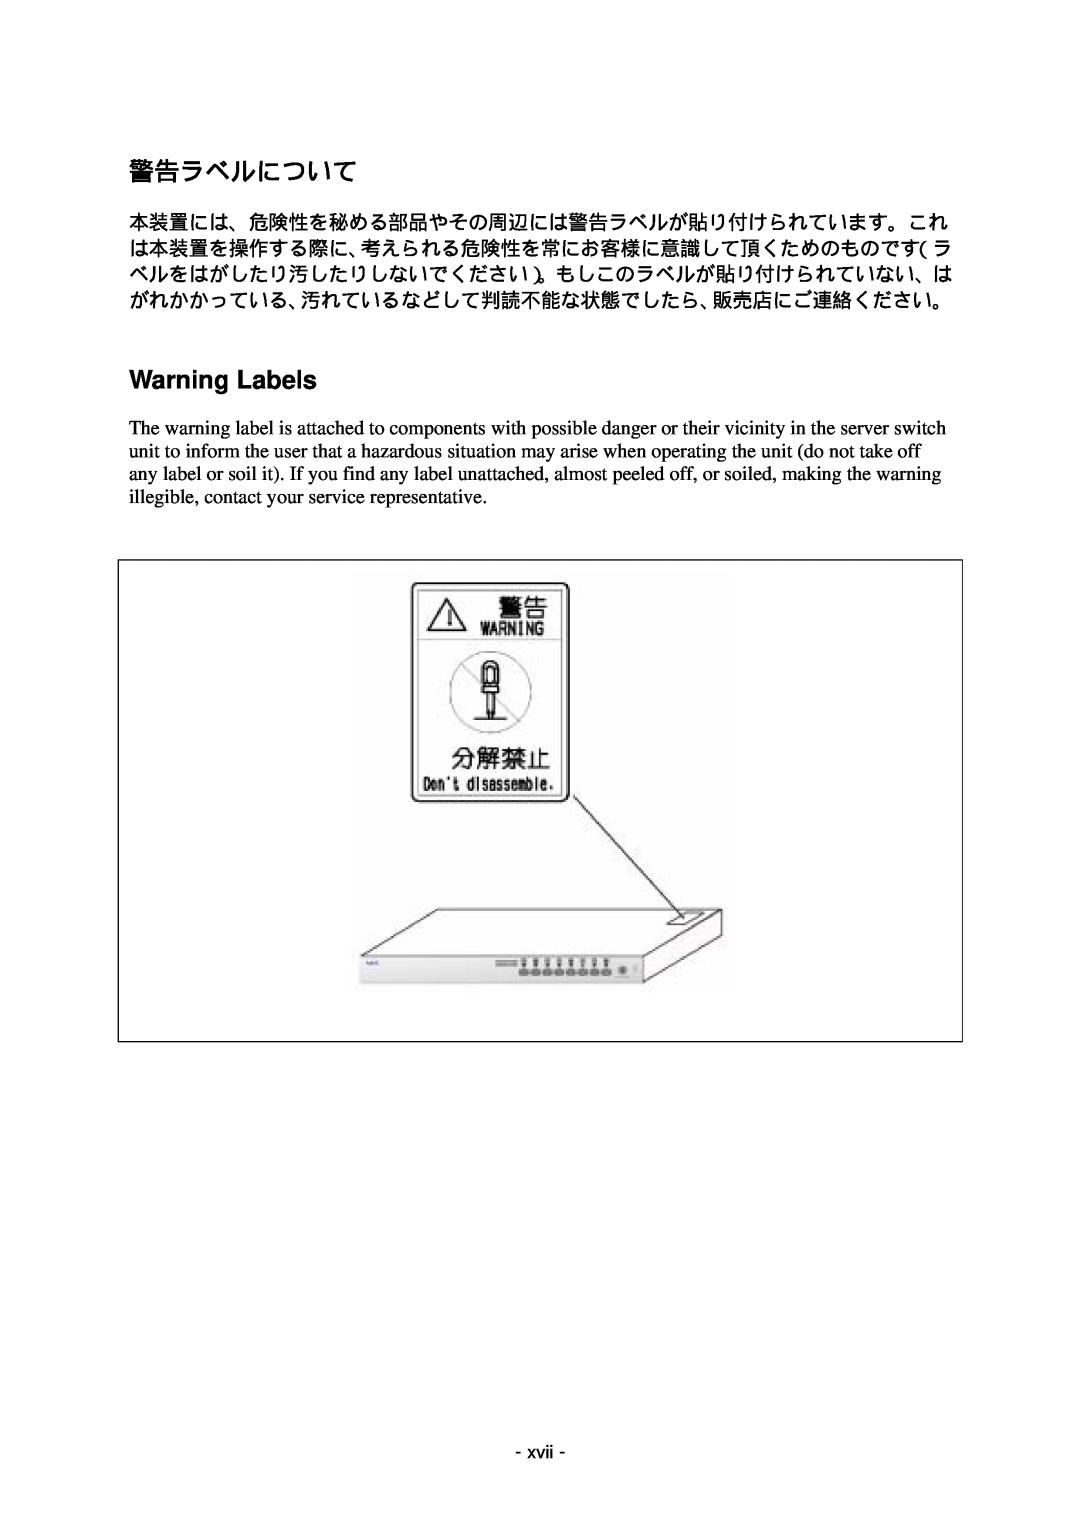 NEC N8191-09 manual 警告ラベルについて, Warning Labels 